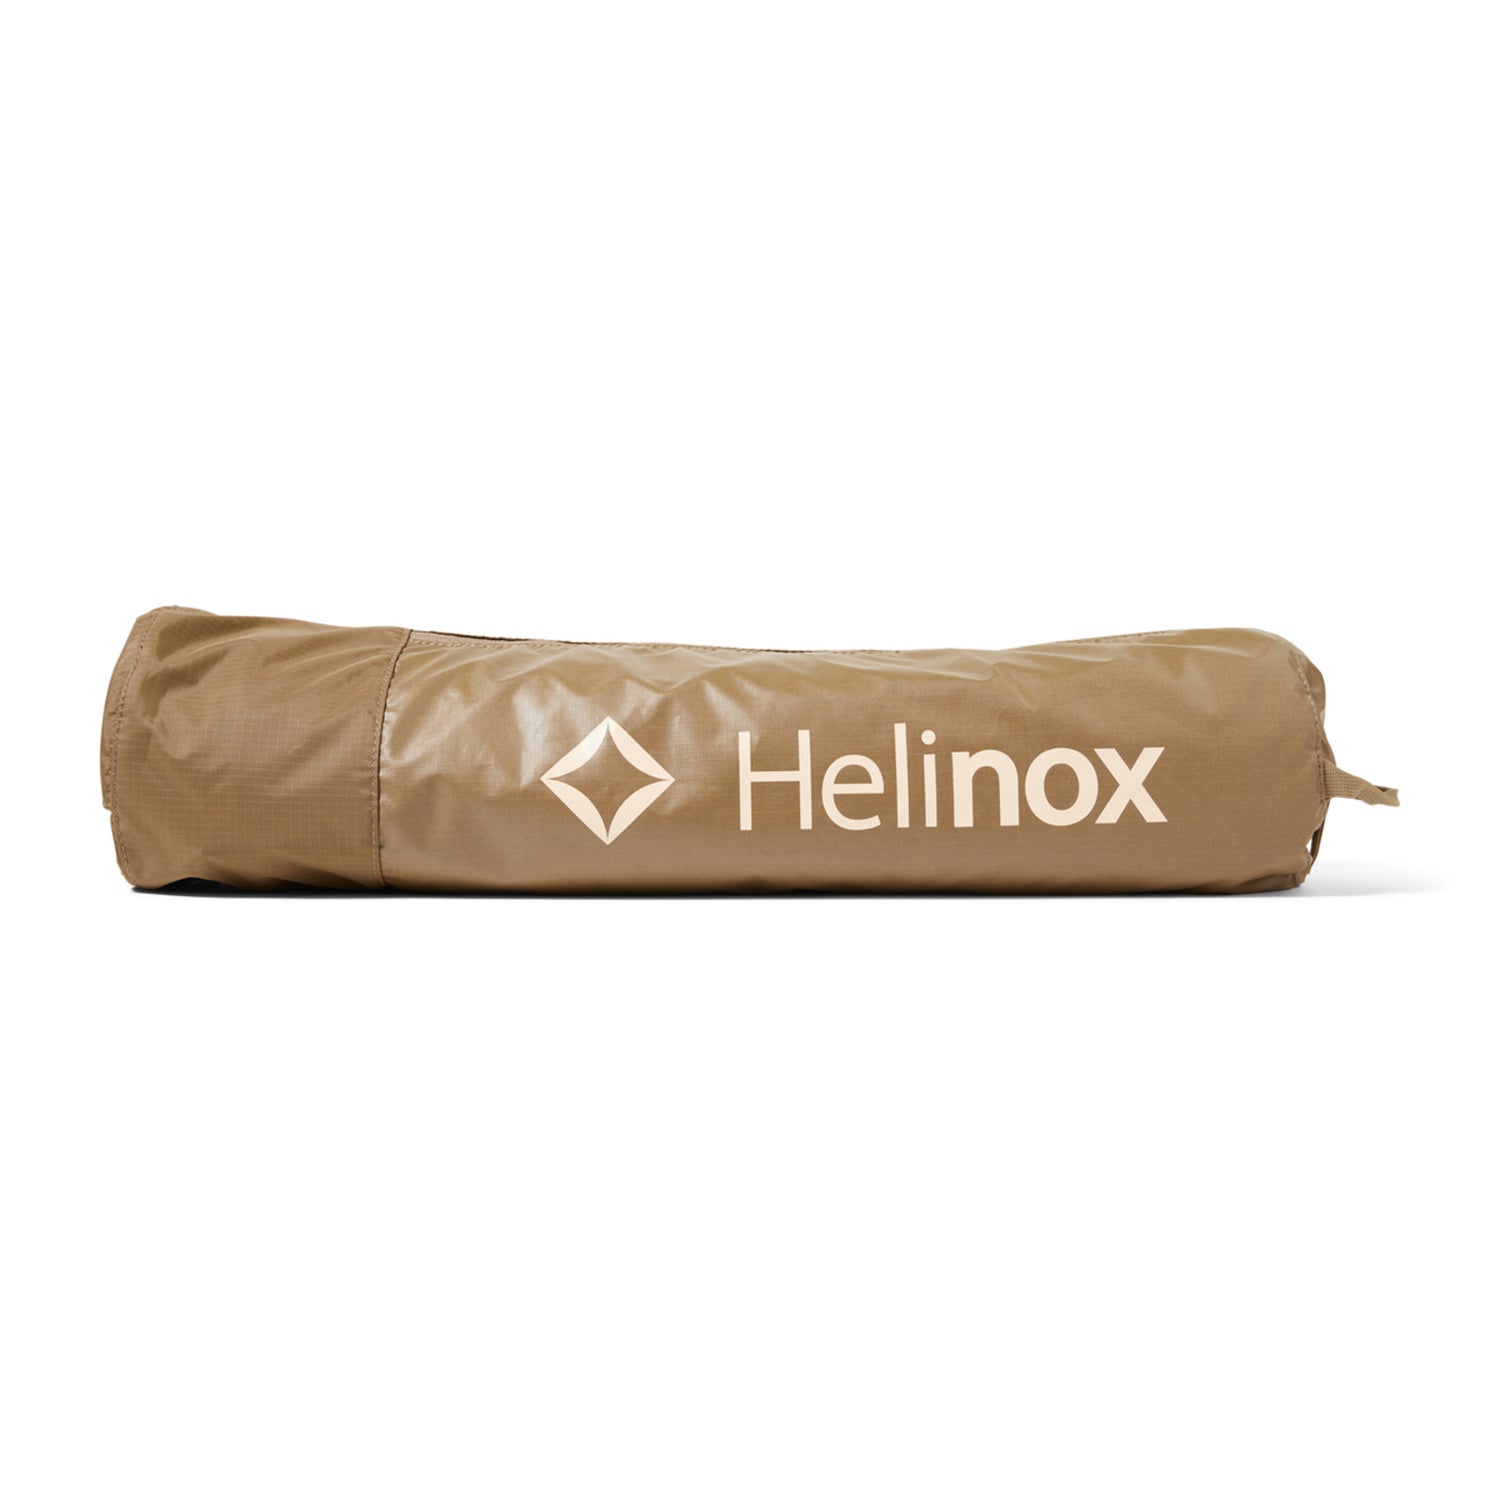 Helinox Cot One Convertible Longe